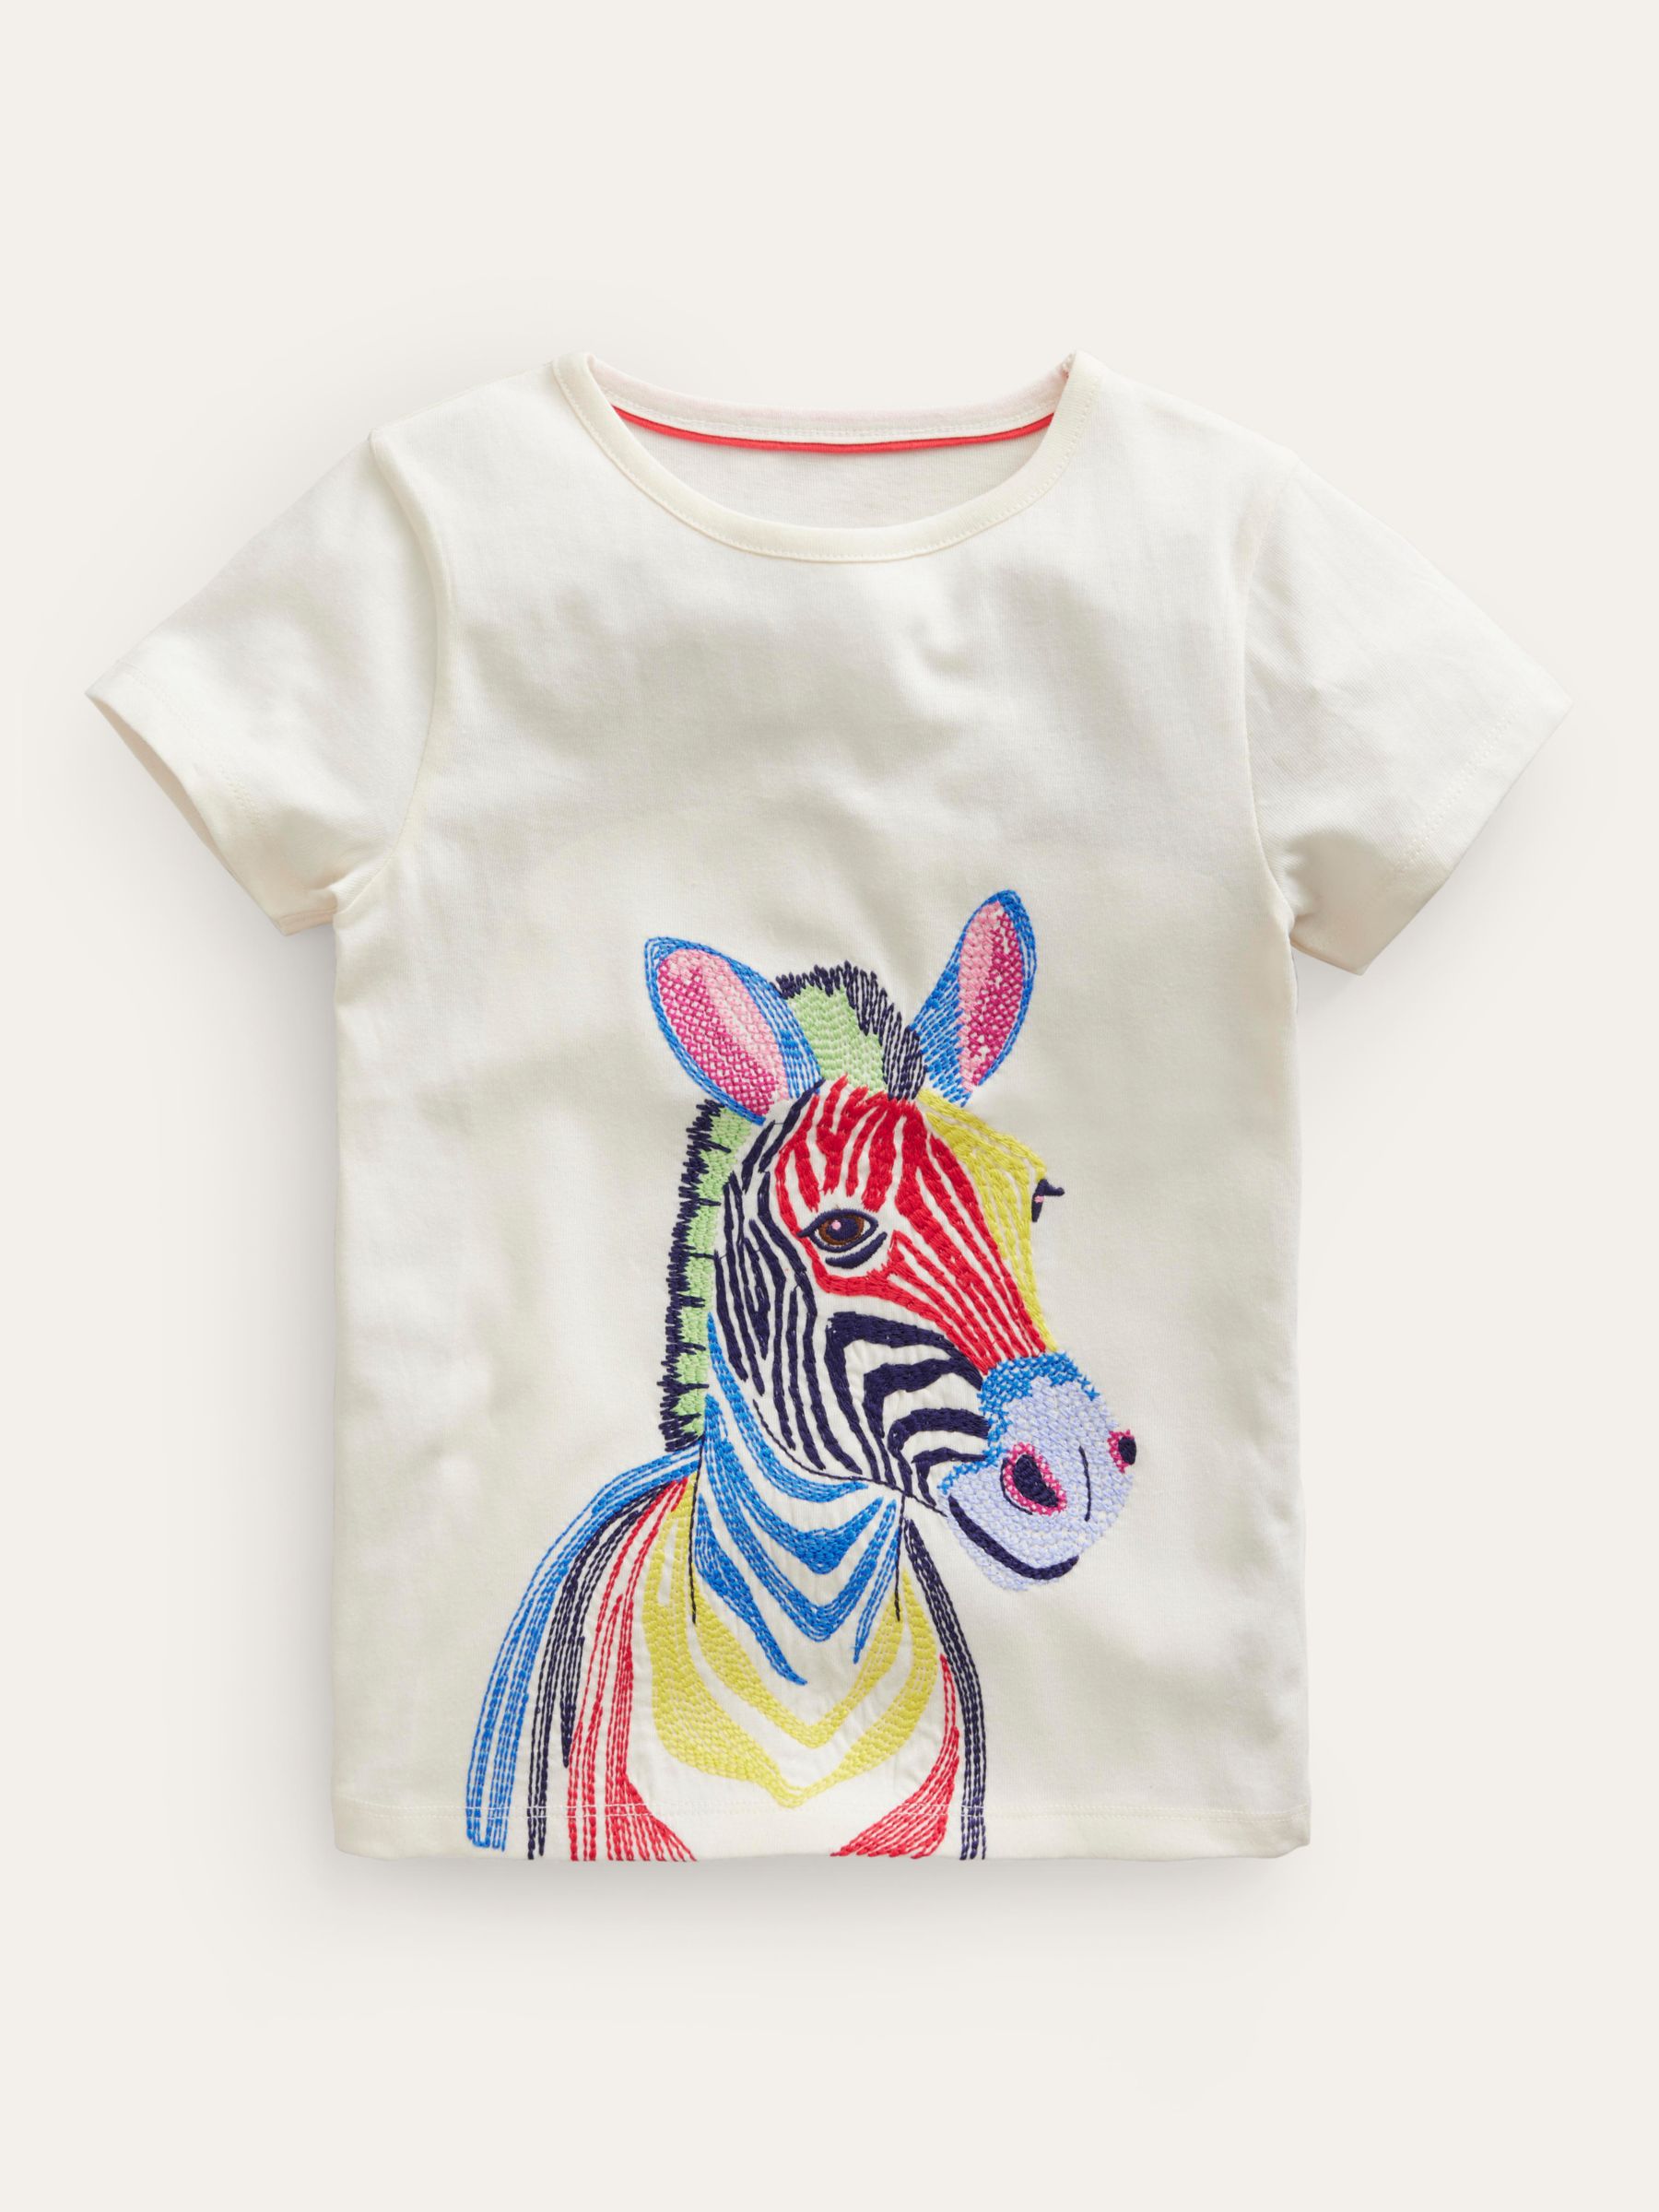 Mini Boden Kids' Zebra Superstitch T-Shirt, Ivory/Multi, 12-18 months